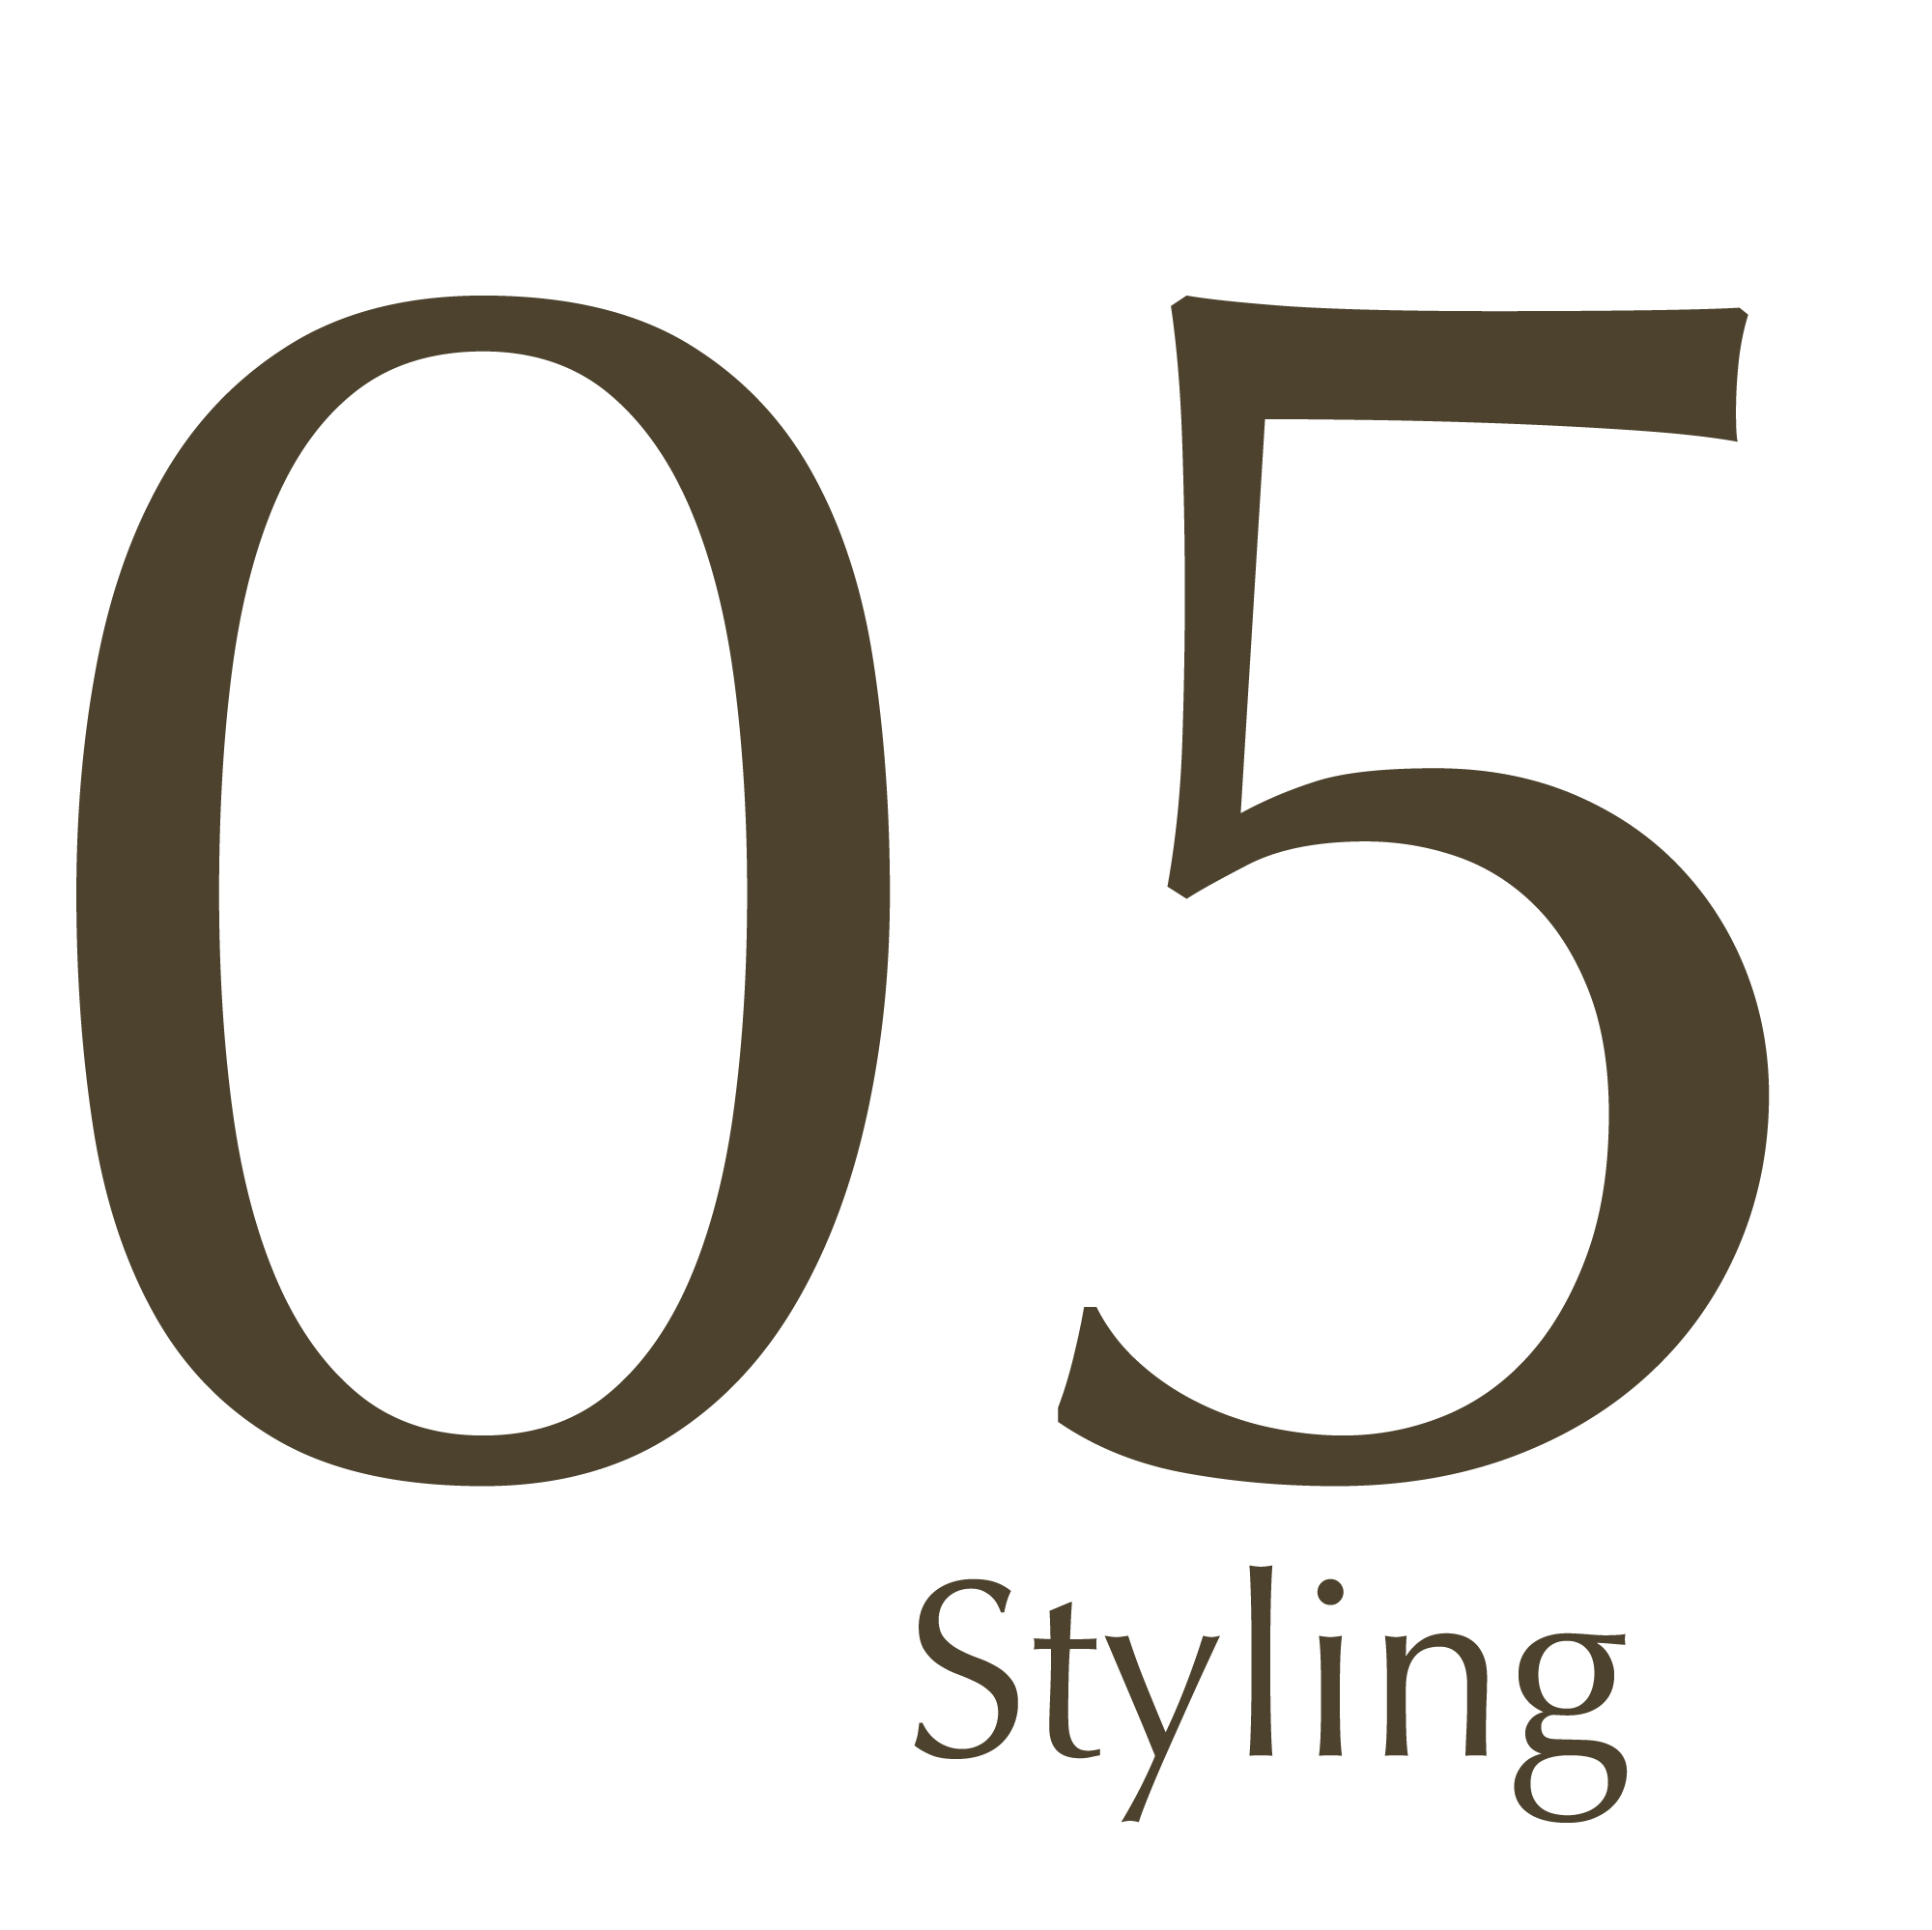 05 styling